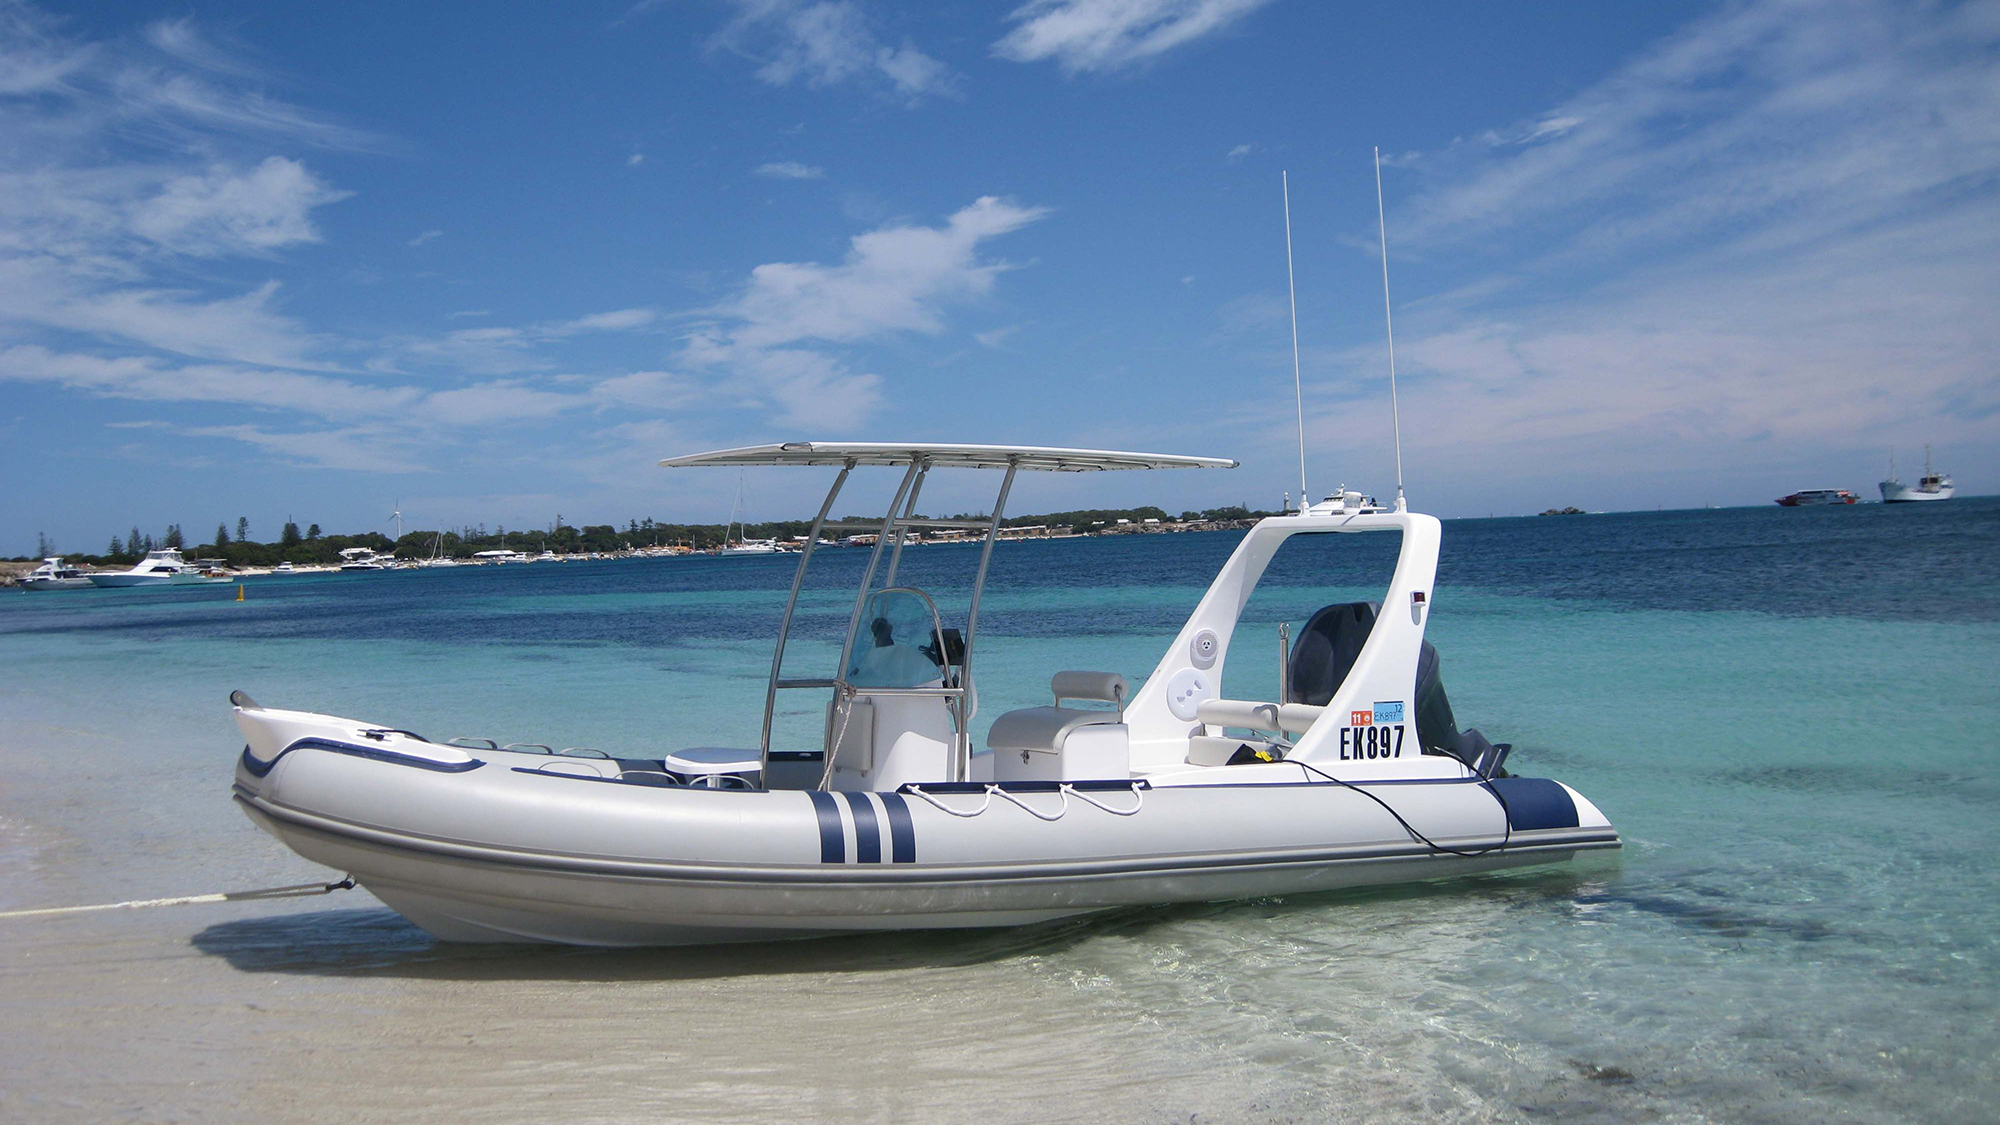 Liya Rib Boat 20ft Inflatable Rib Boat Fiberglass Rib Boat 6 2 Meter